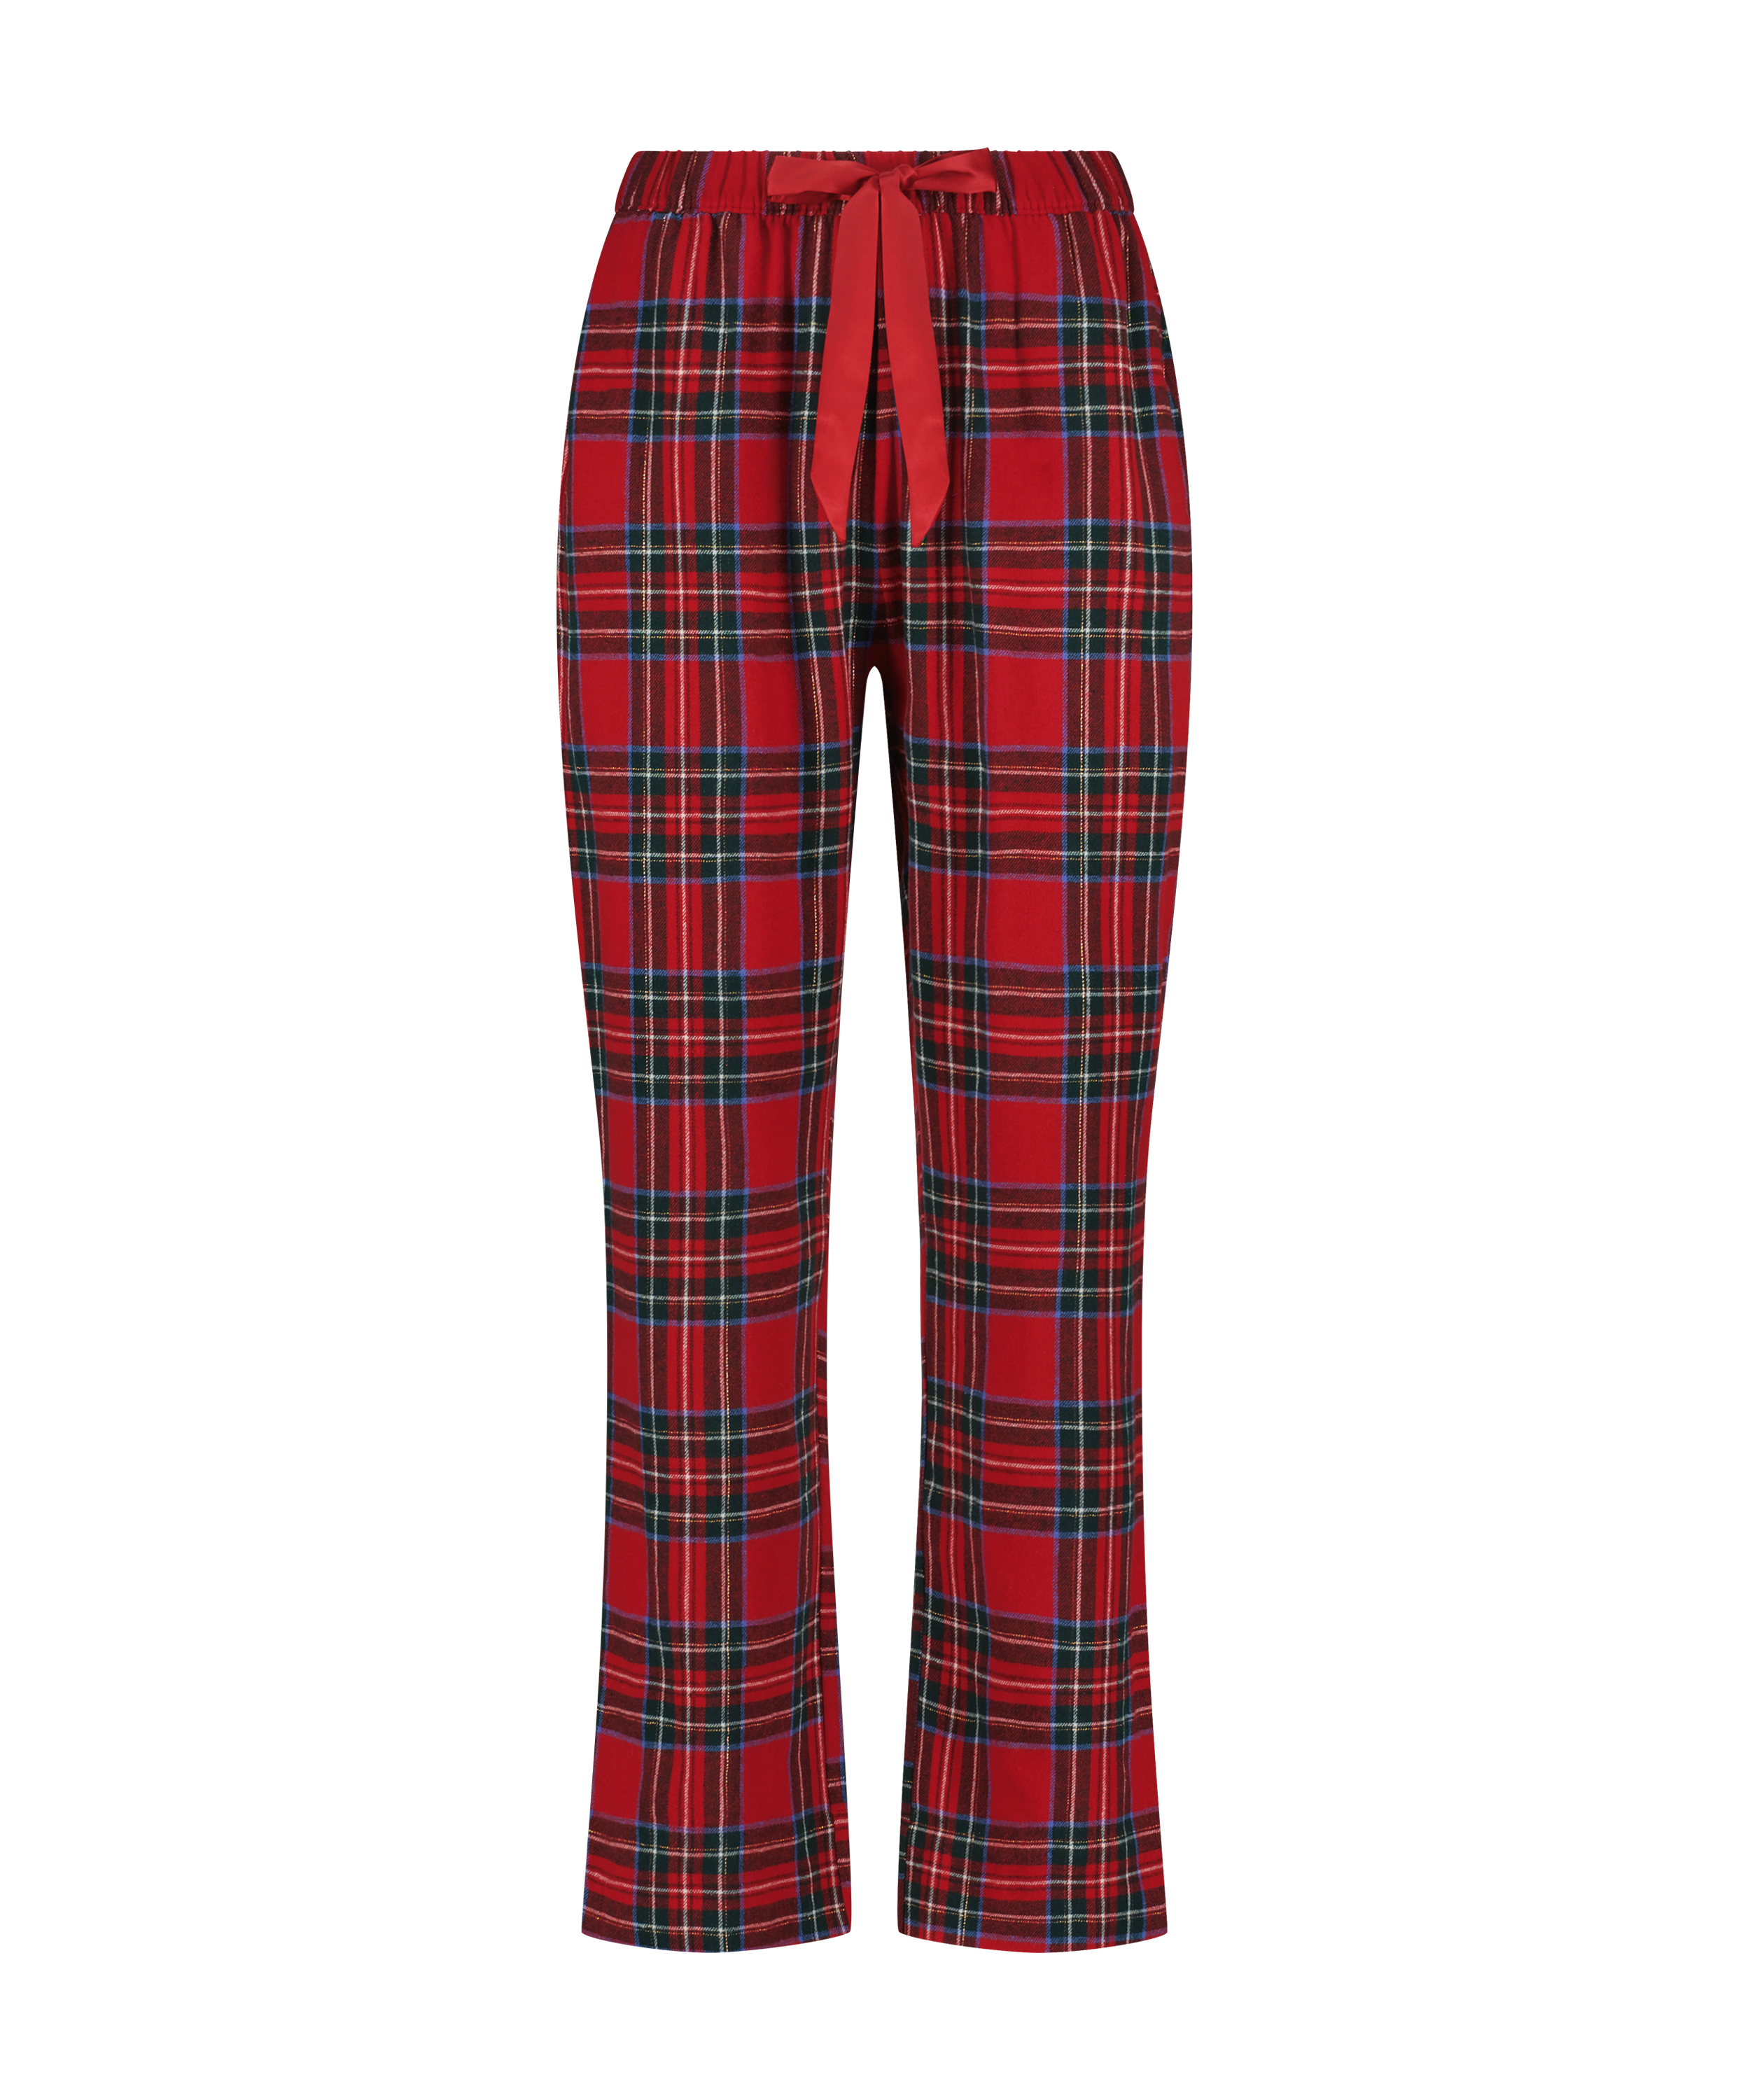 Pyjamasbukser af flonel, rød, main